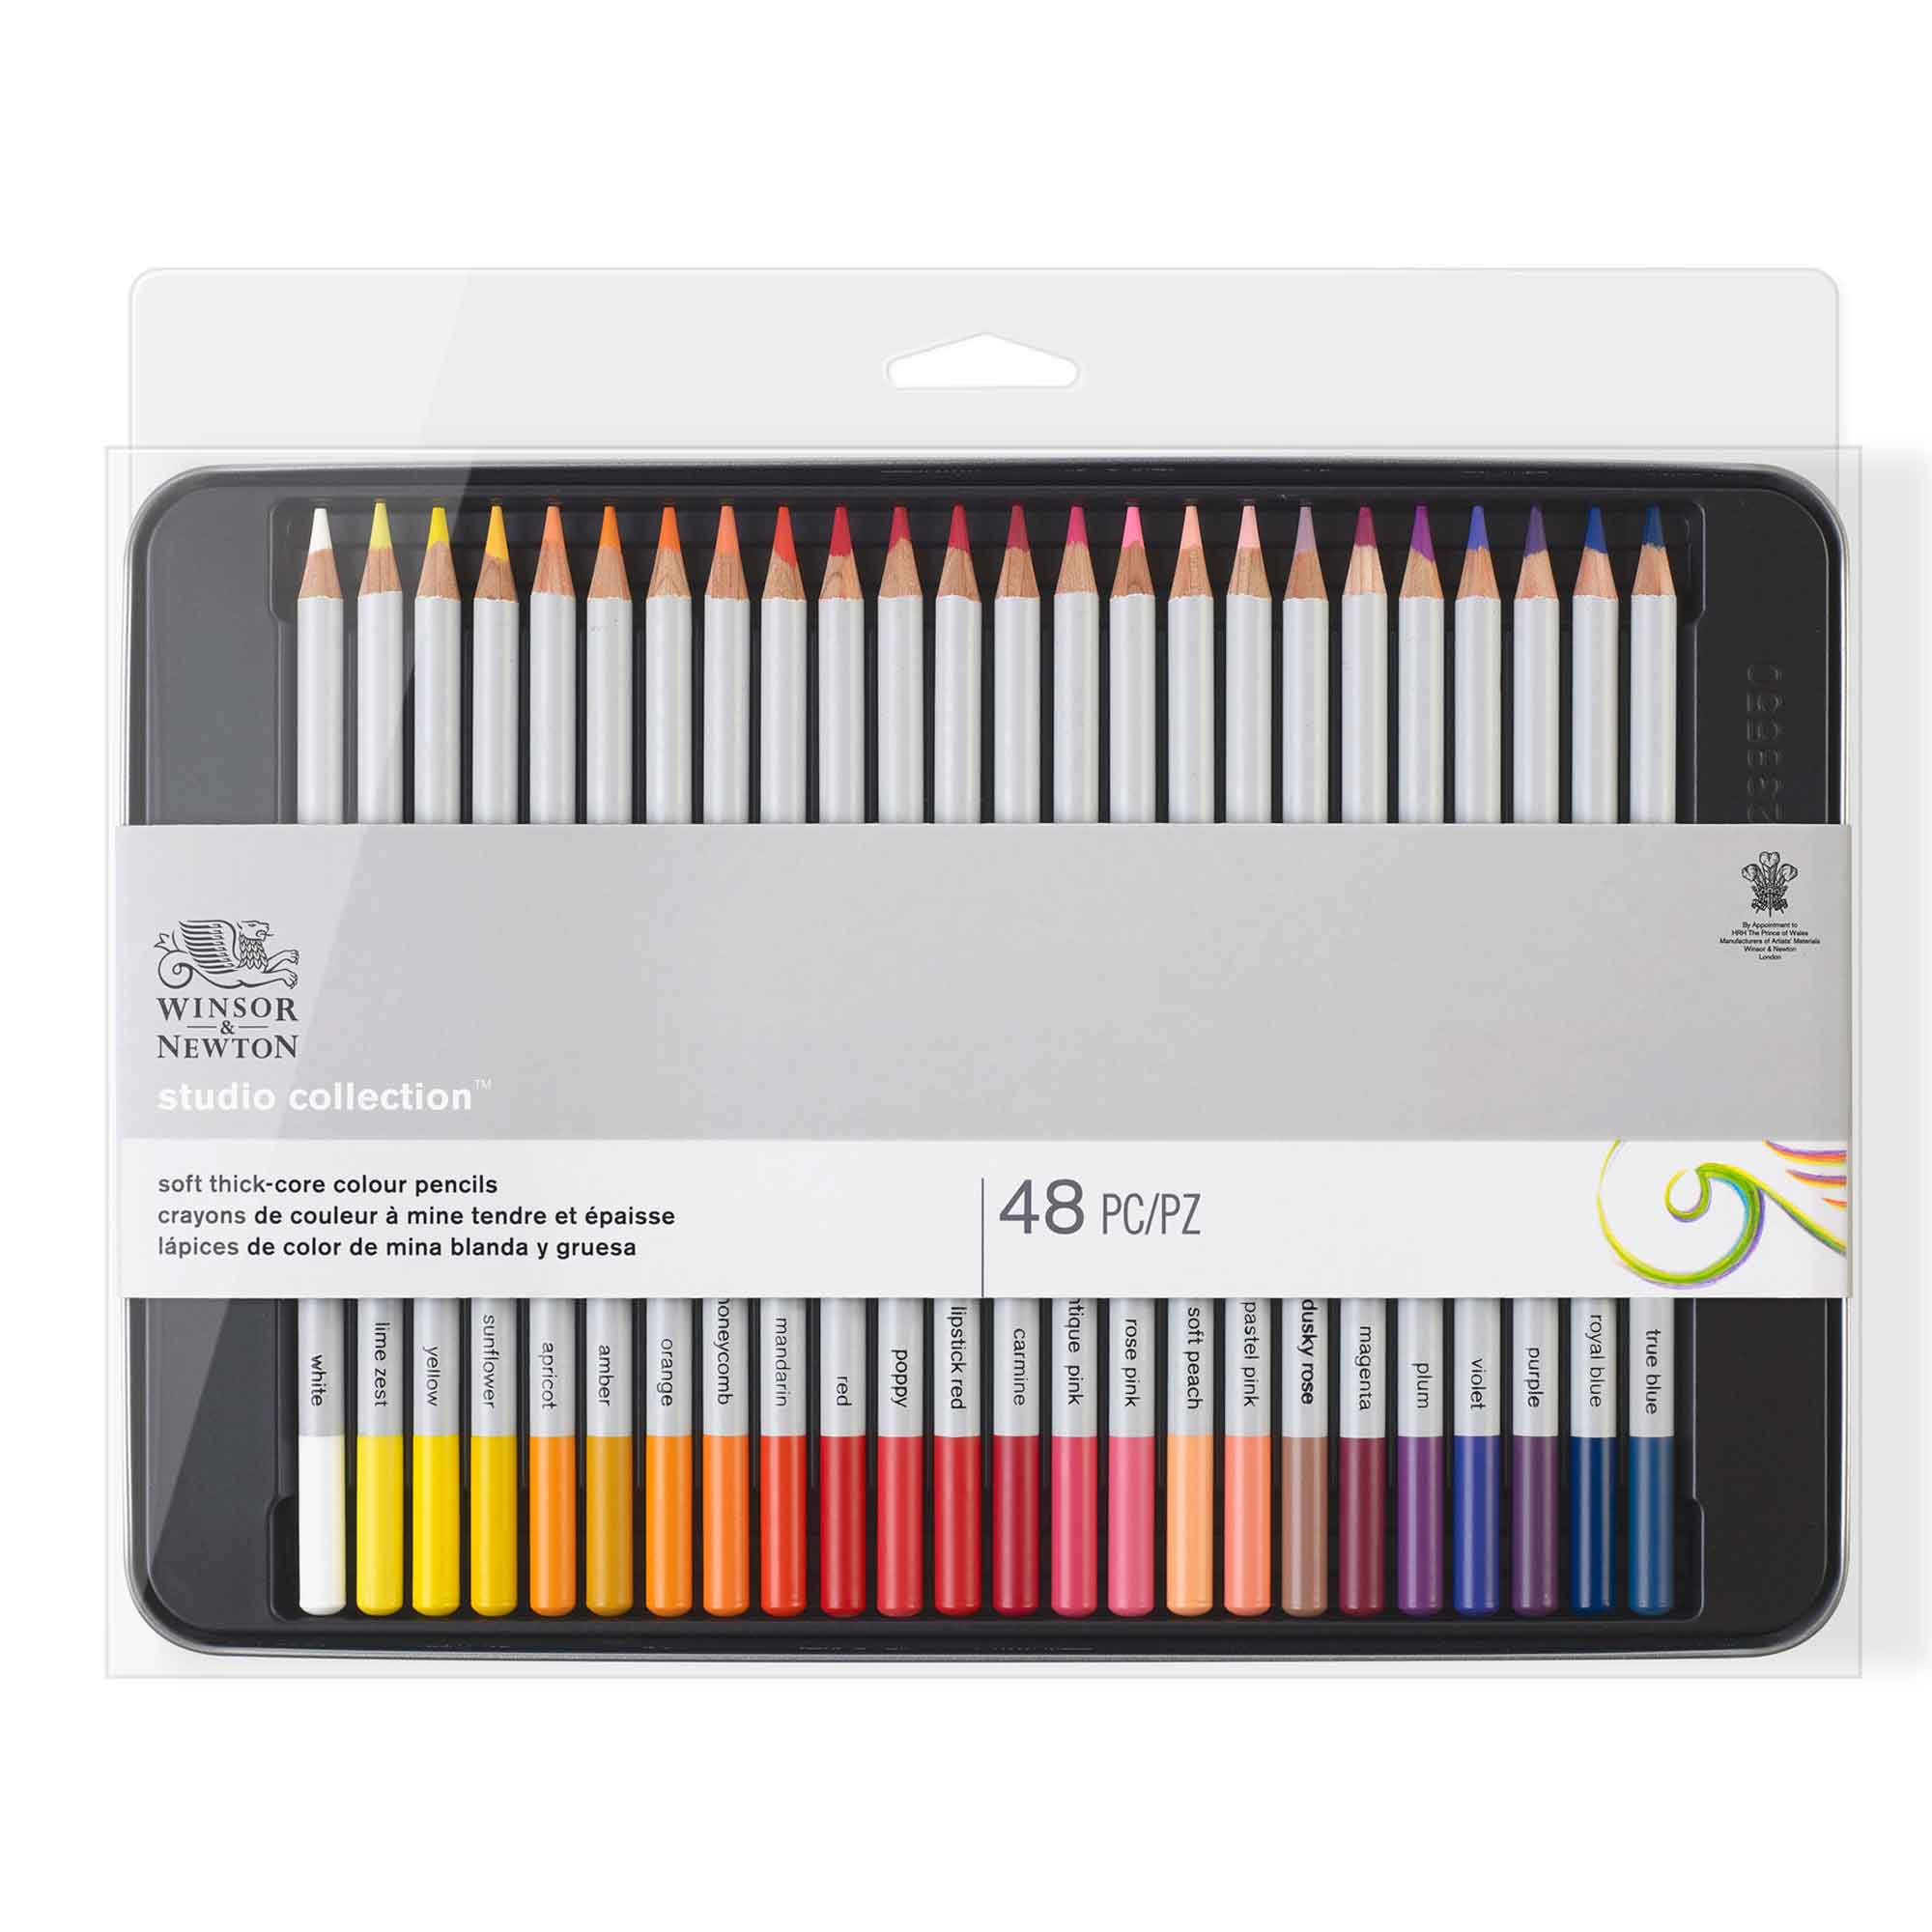 Winsor & Newton Studio Collection Soft Thick-Core Colour Pencils - Set of 48